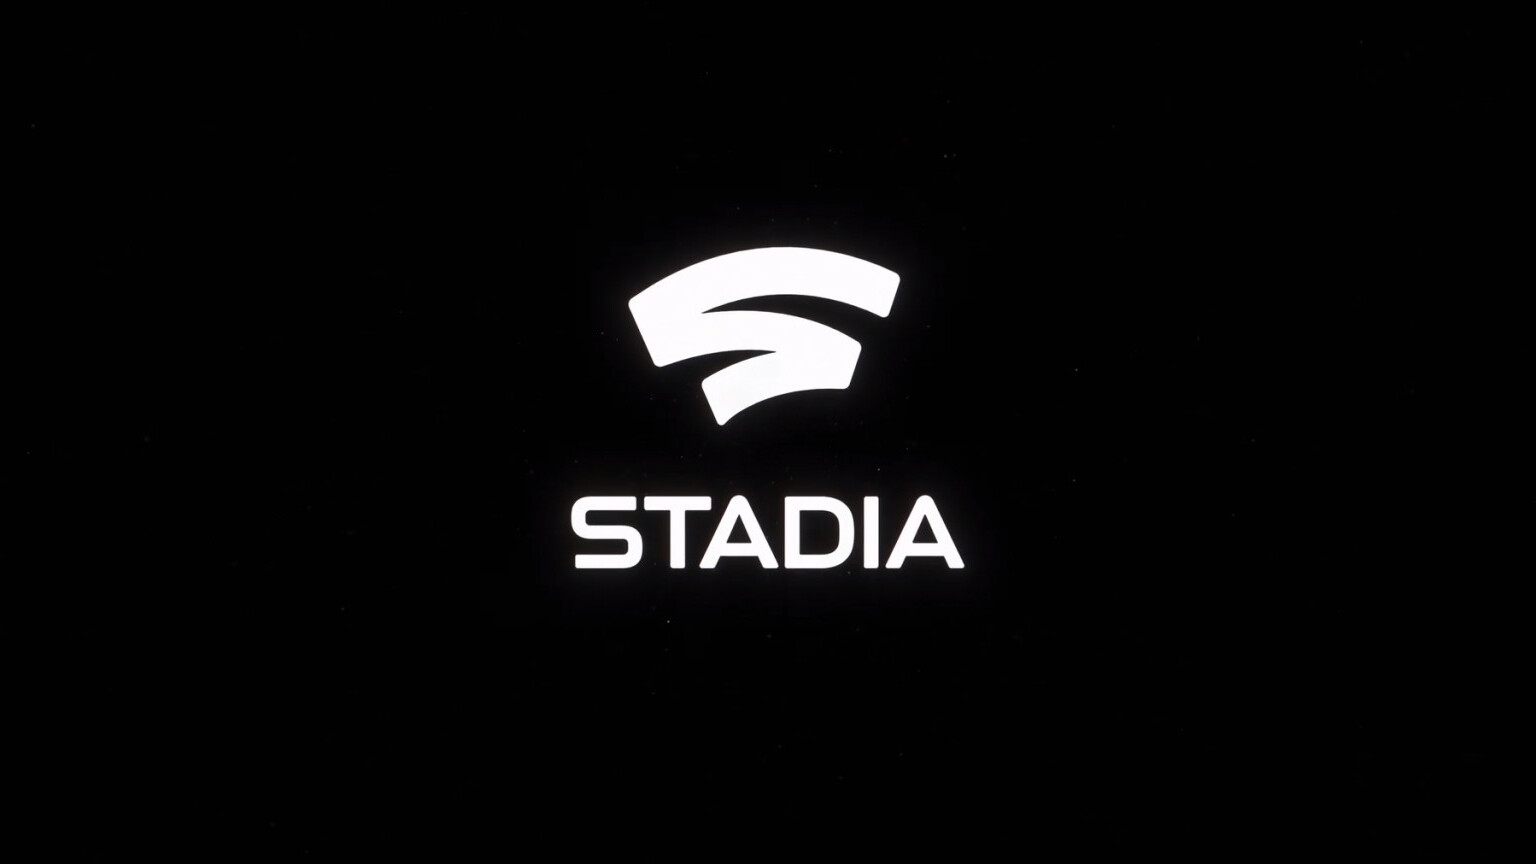 Google announces Stadia, its cross-platform game streaming service